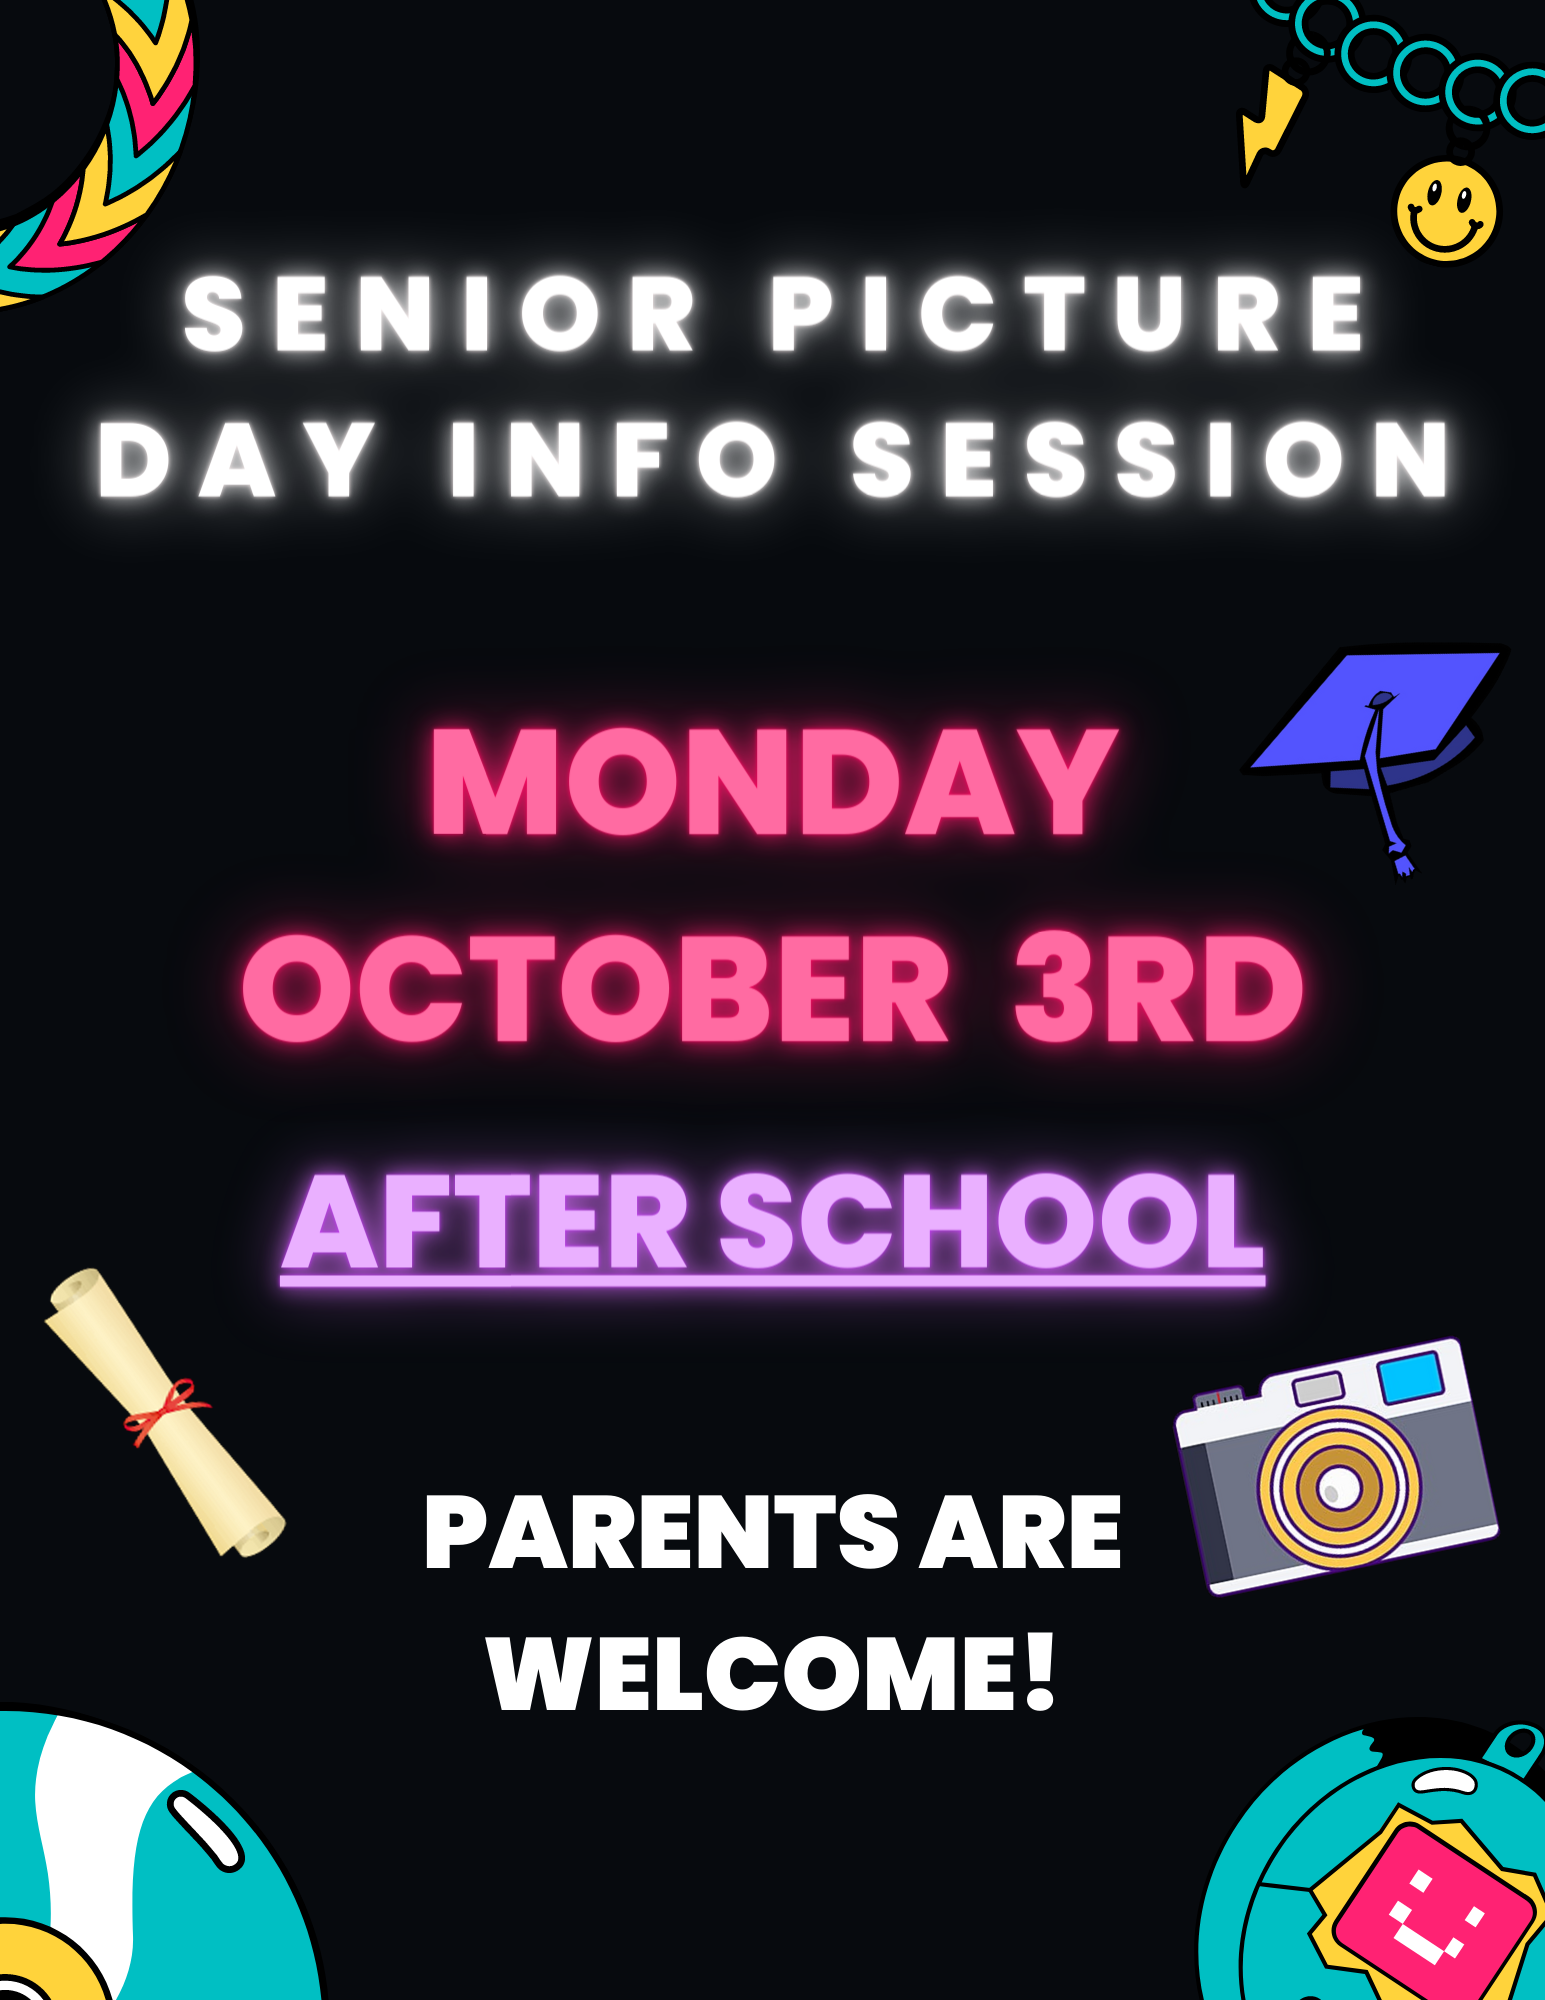 Senior Picture Day Info Session